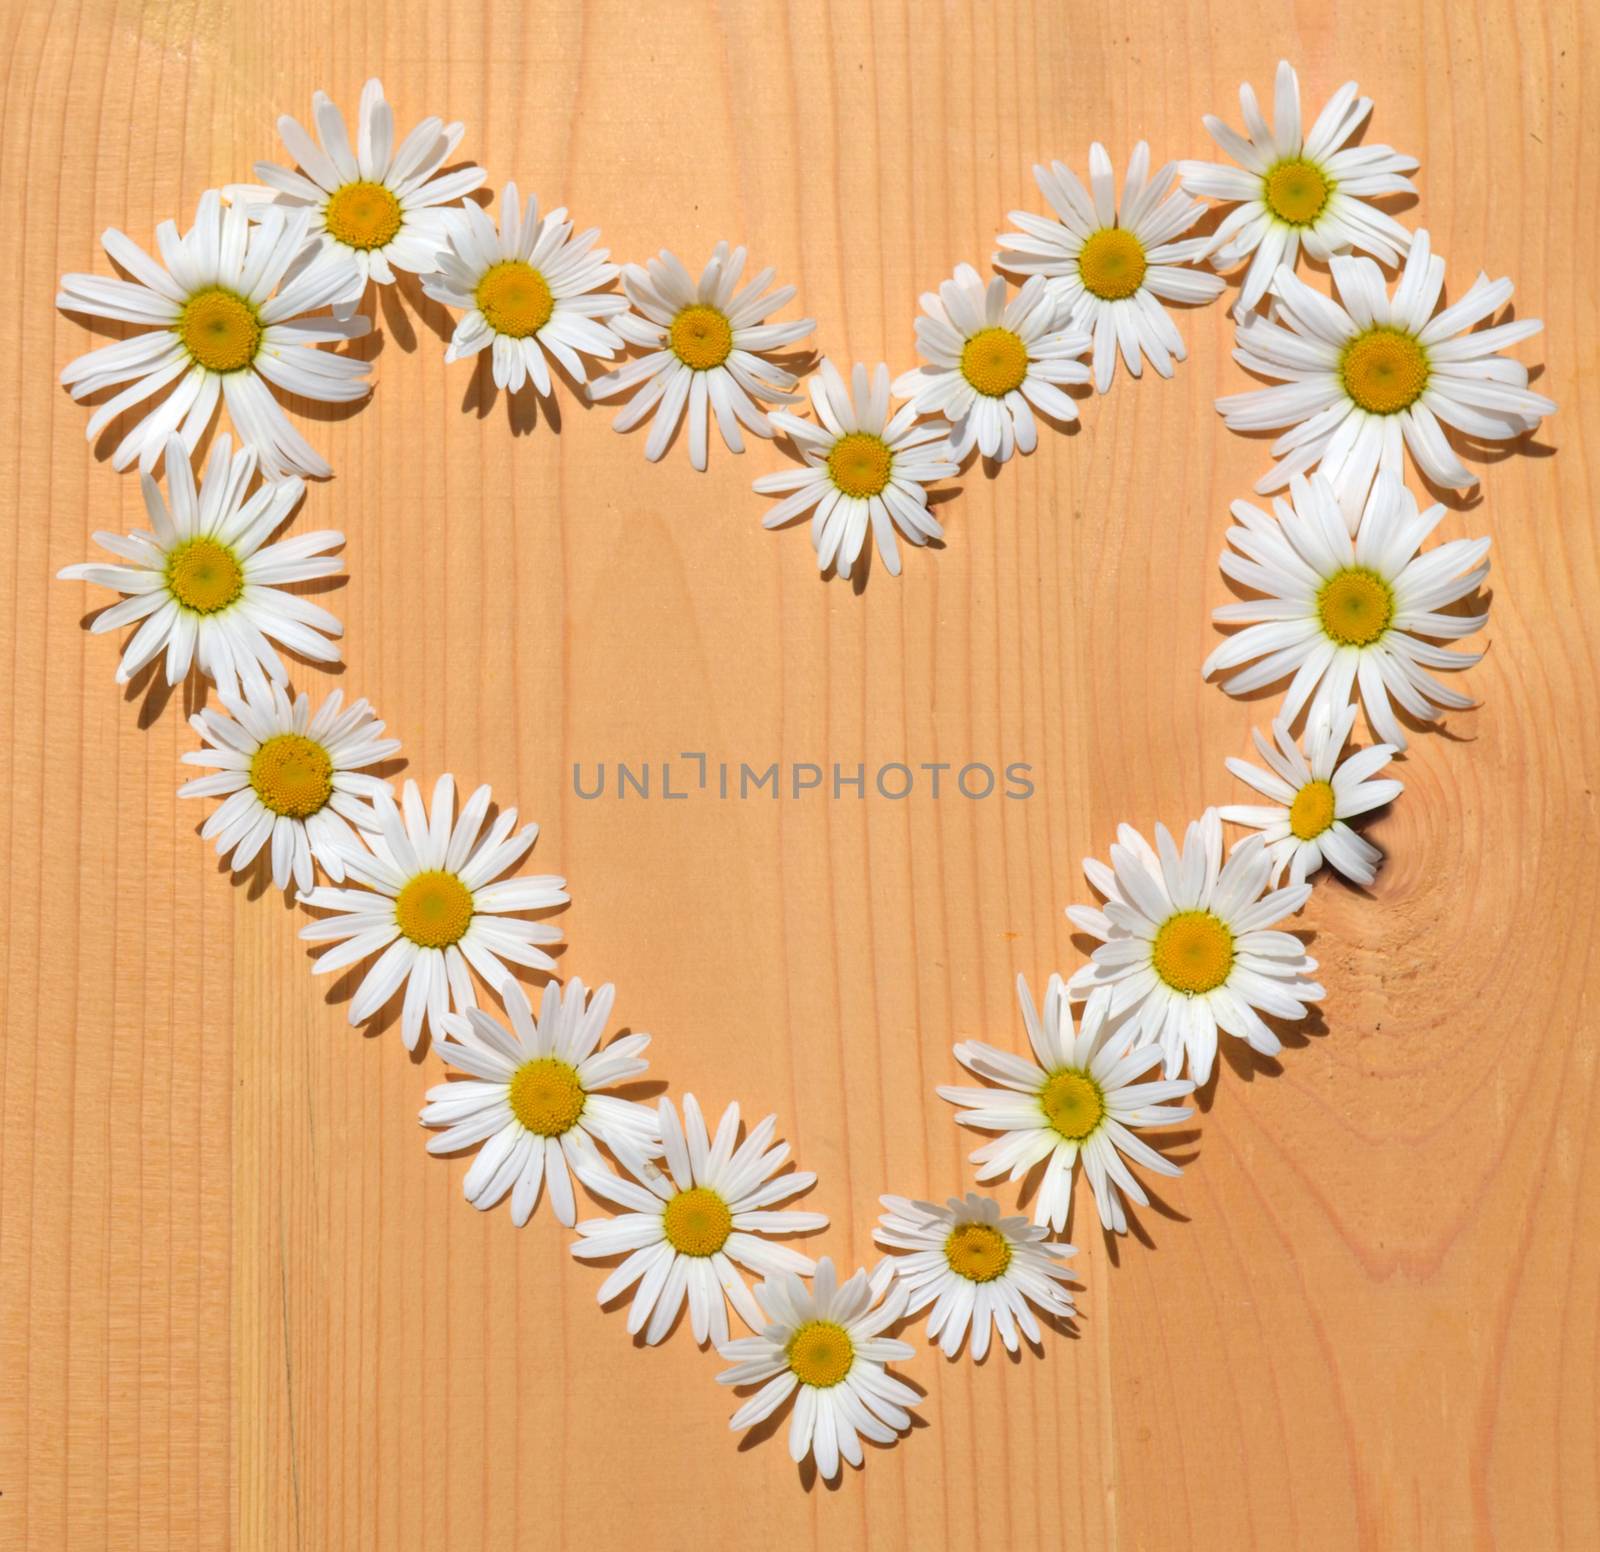 Daisy flower frame in shape of heart by hibrida13